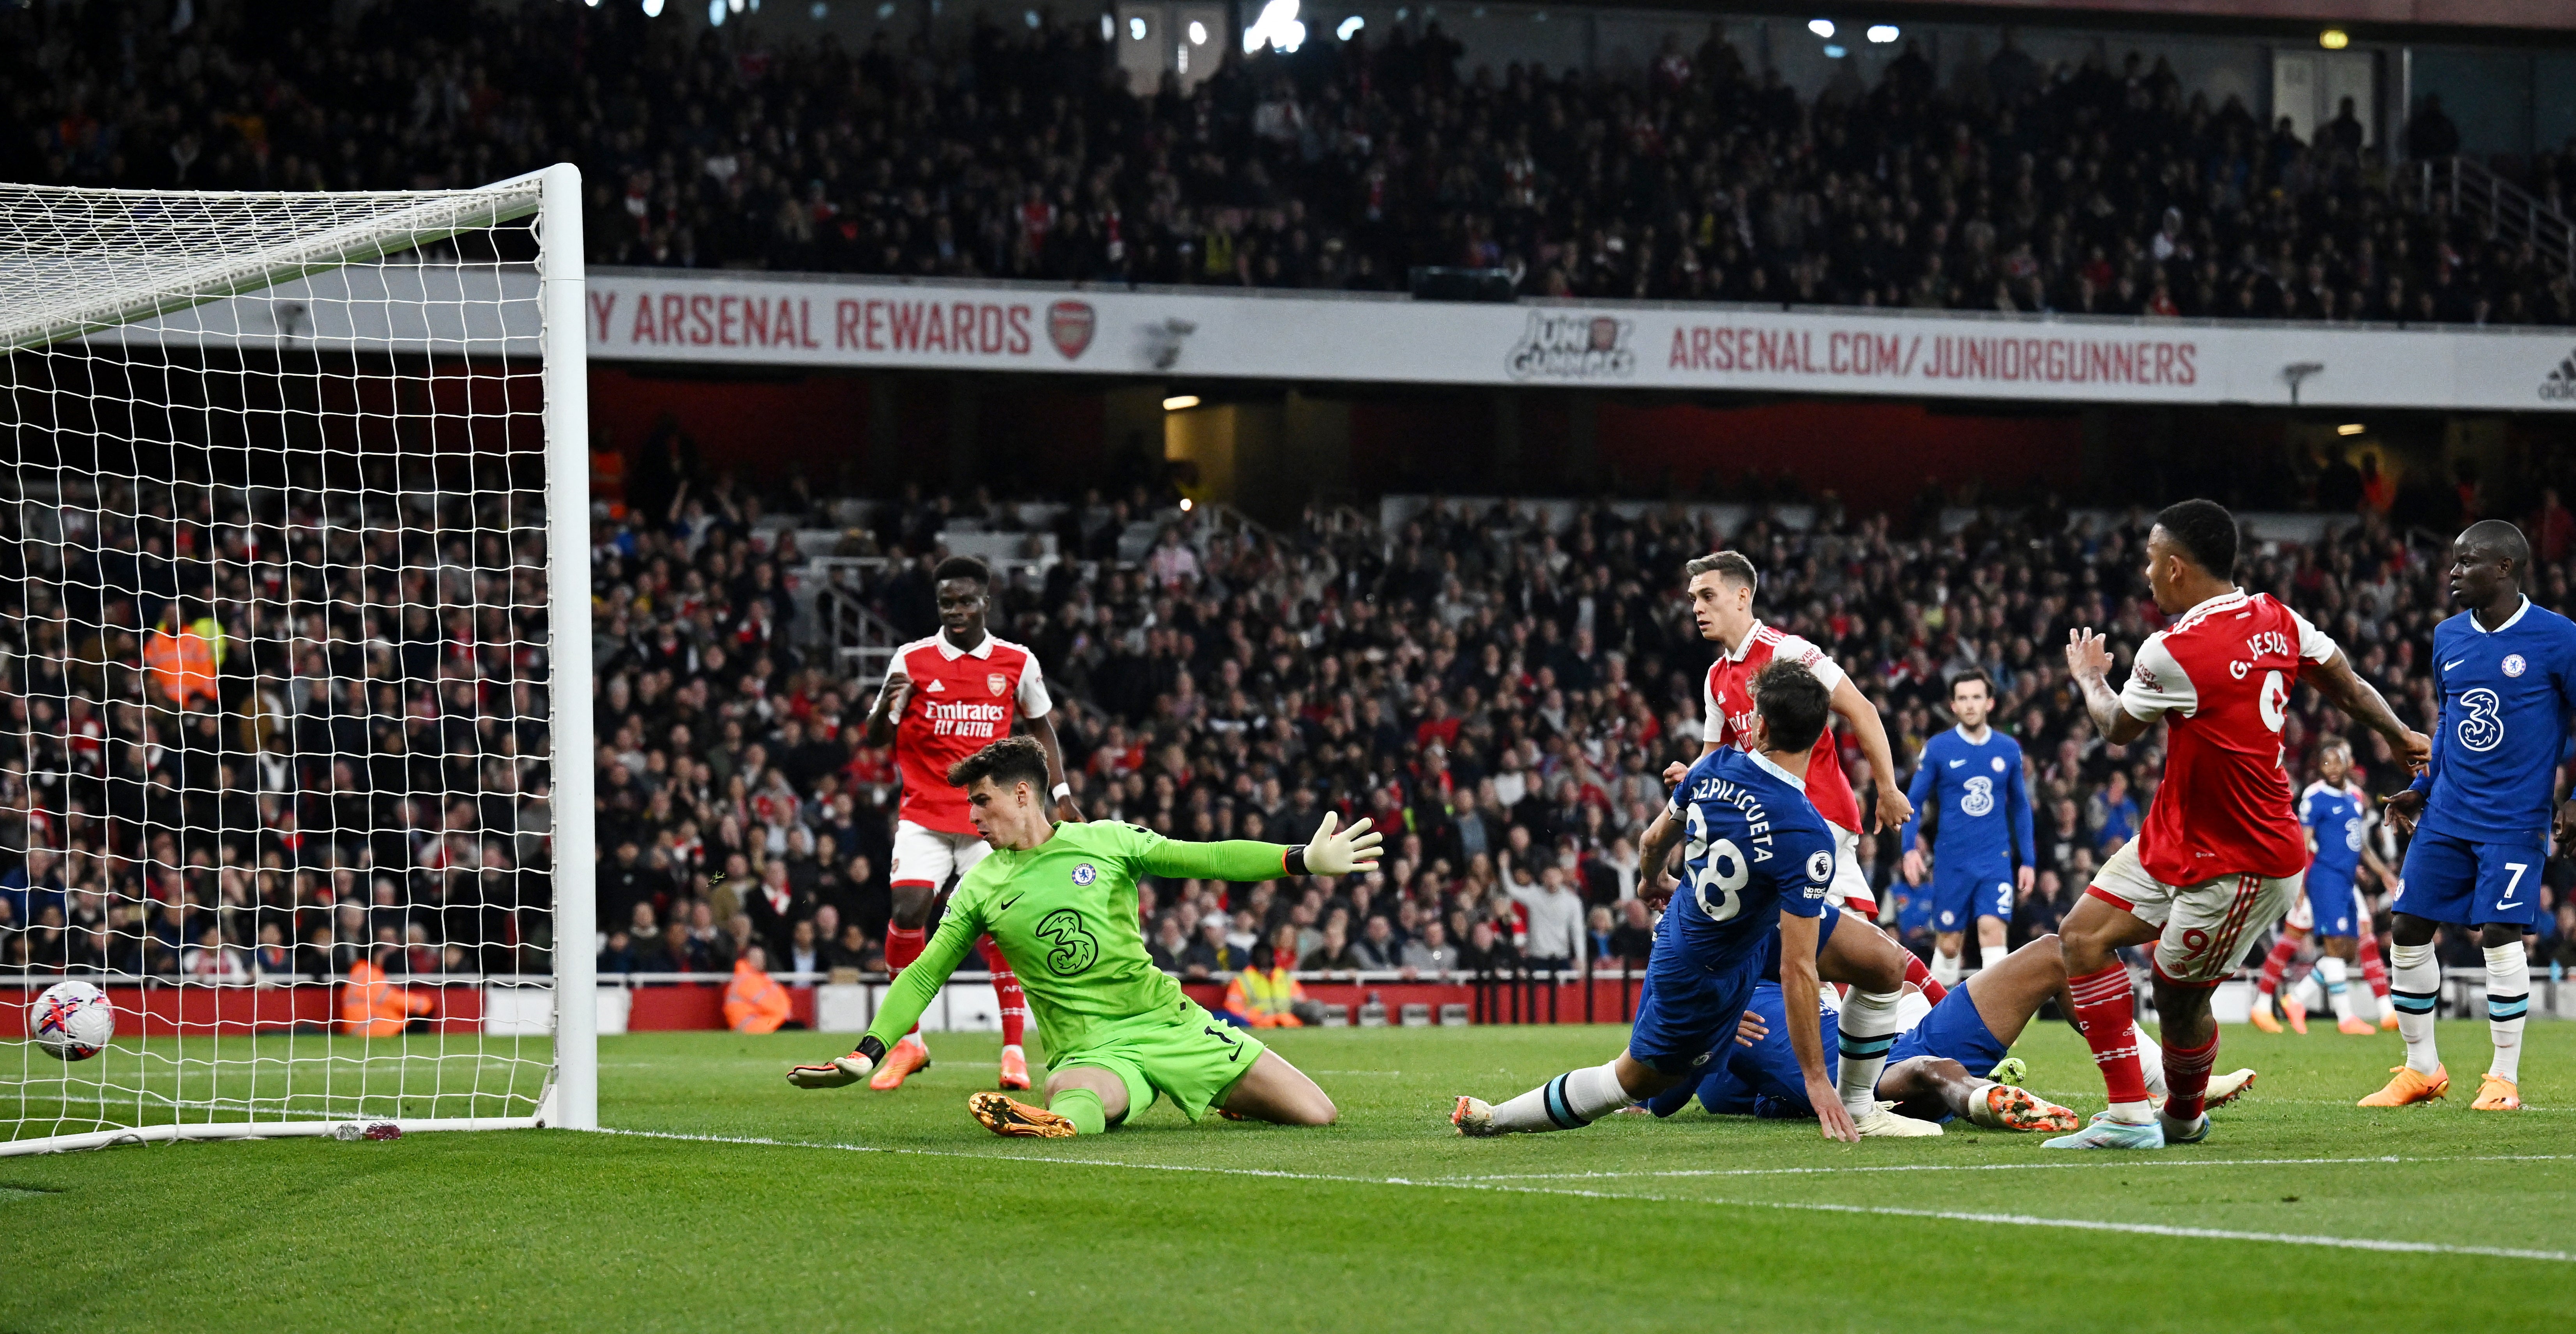 Gabriel Jesus scores Arsenal’s third goal from close range